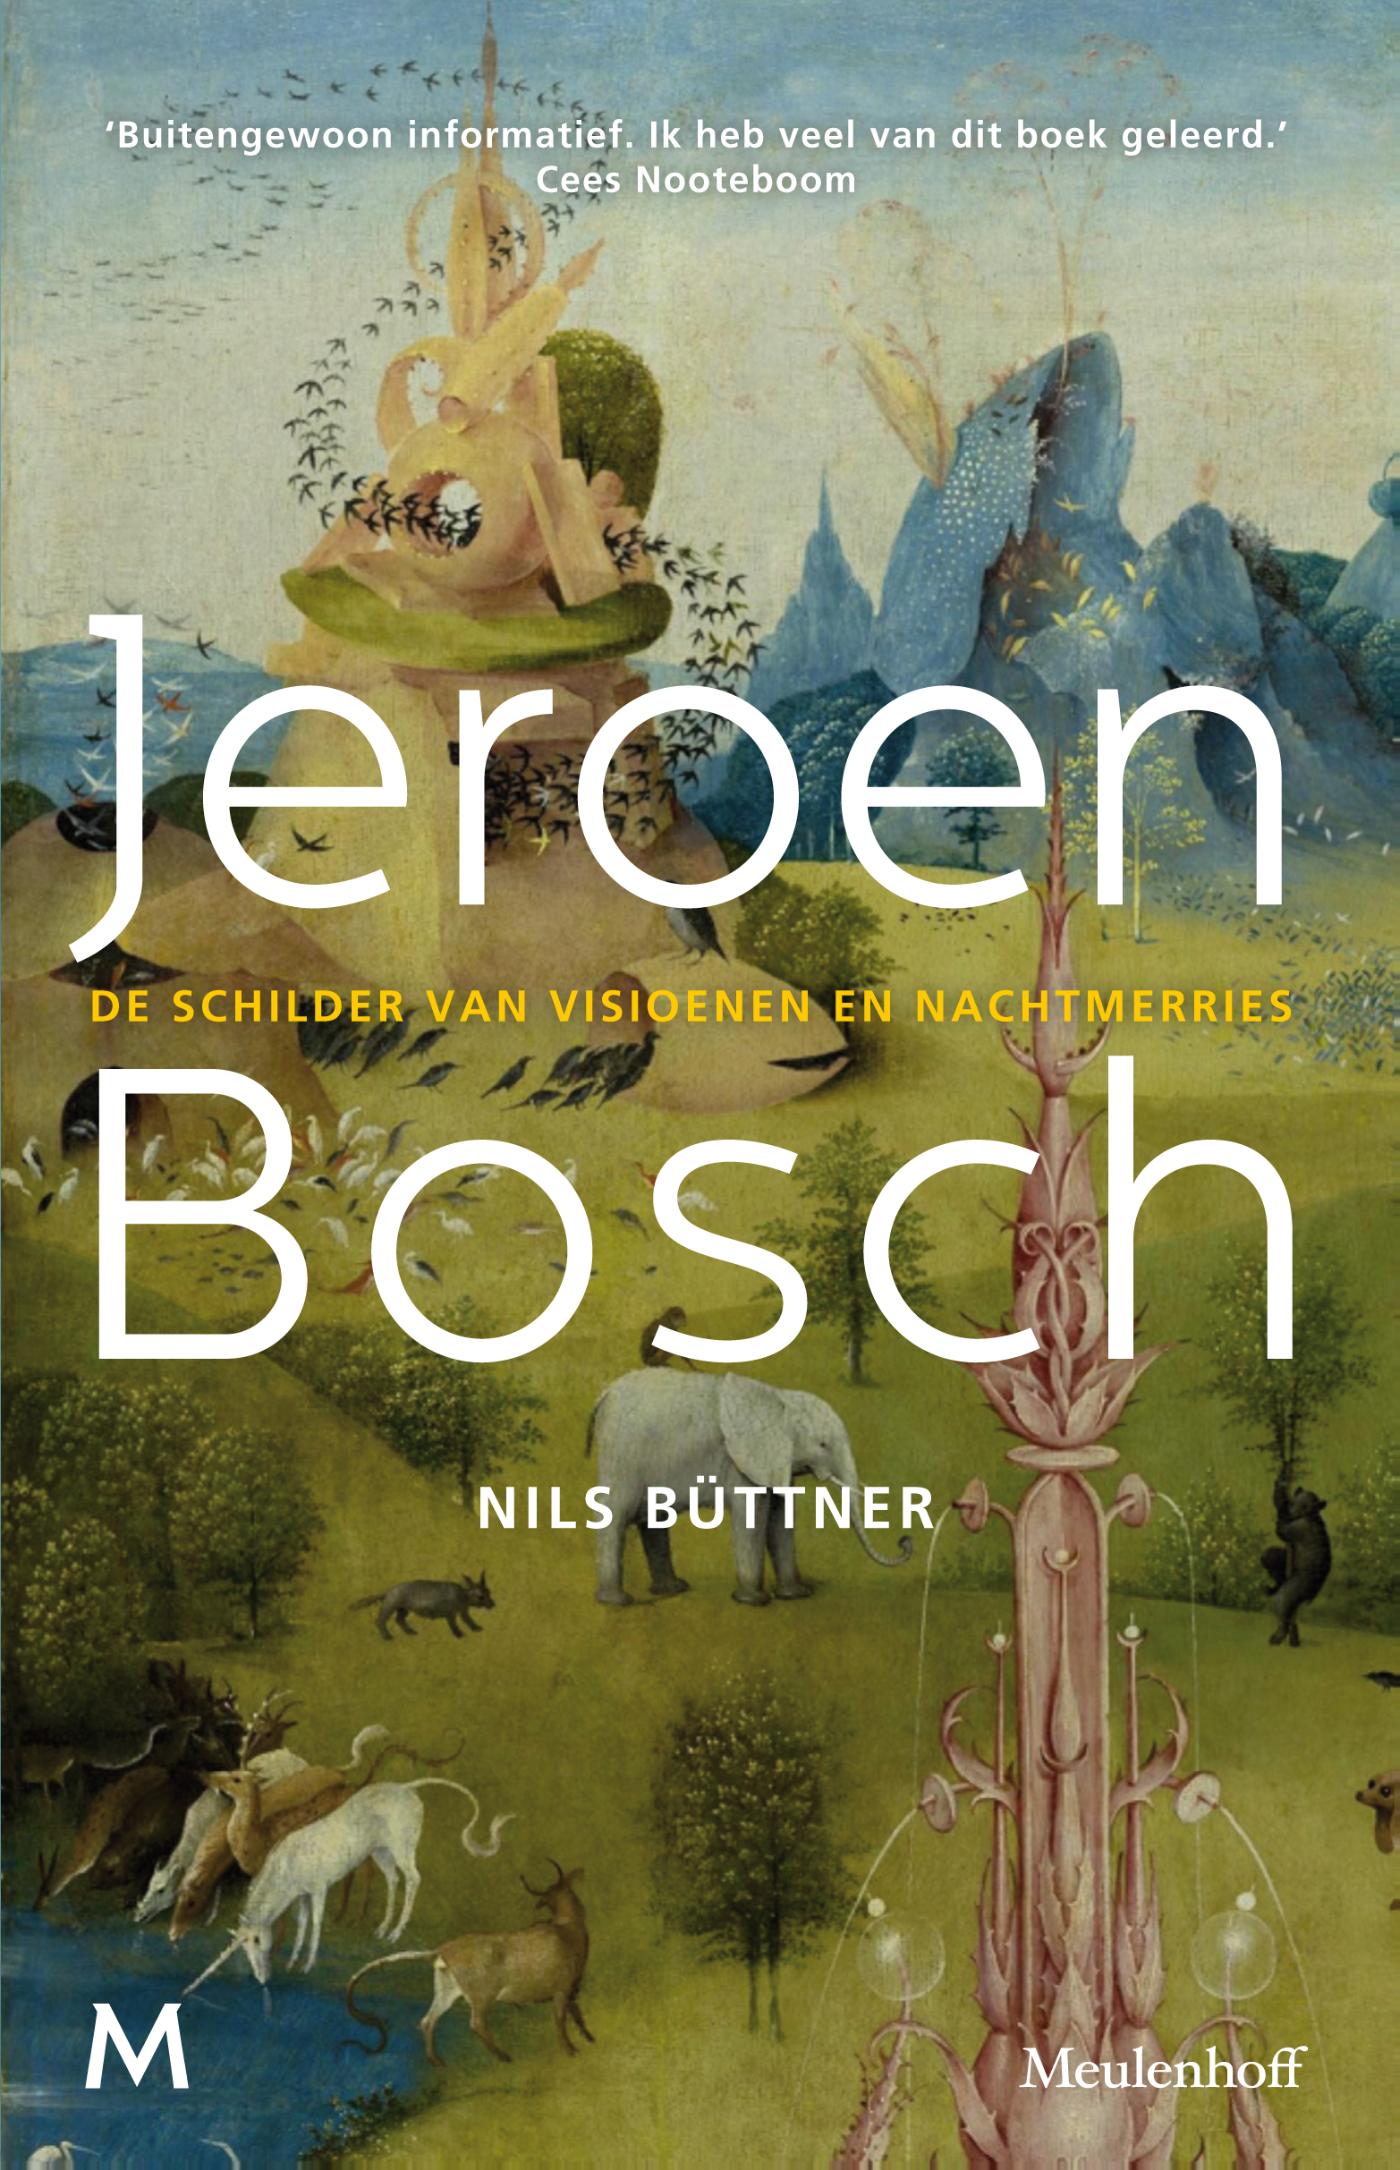 Jeroen Bosch (Ebook)